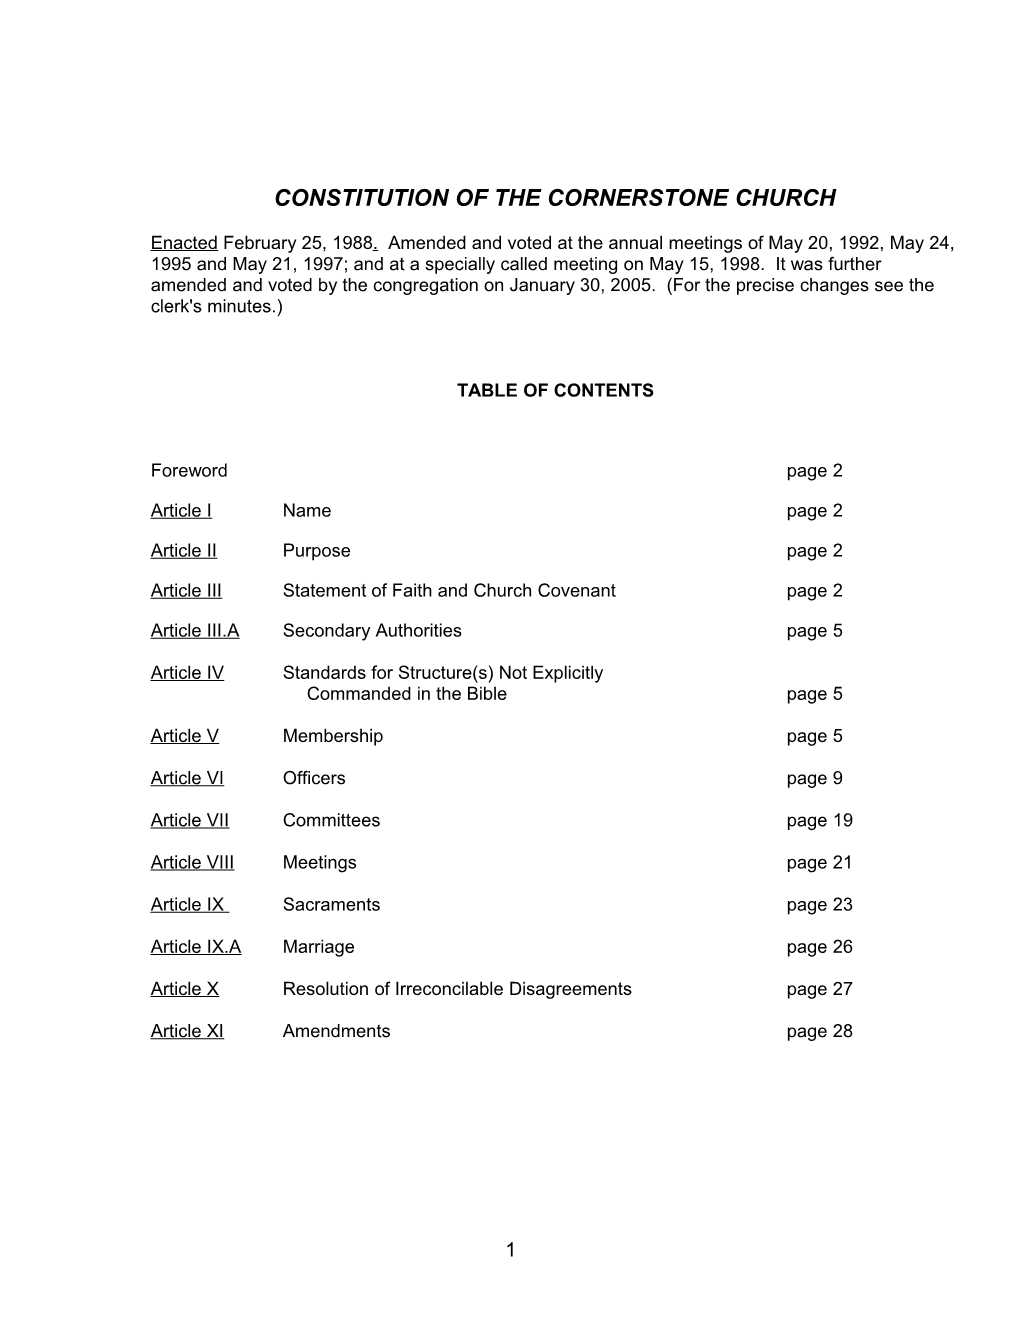 Constitution of the Cornerstone Church